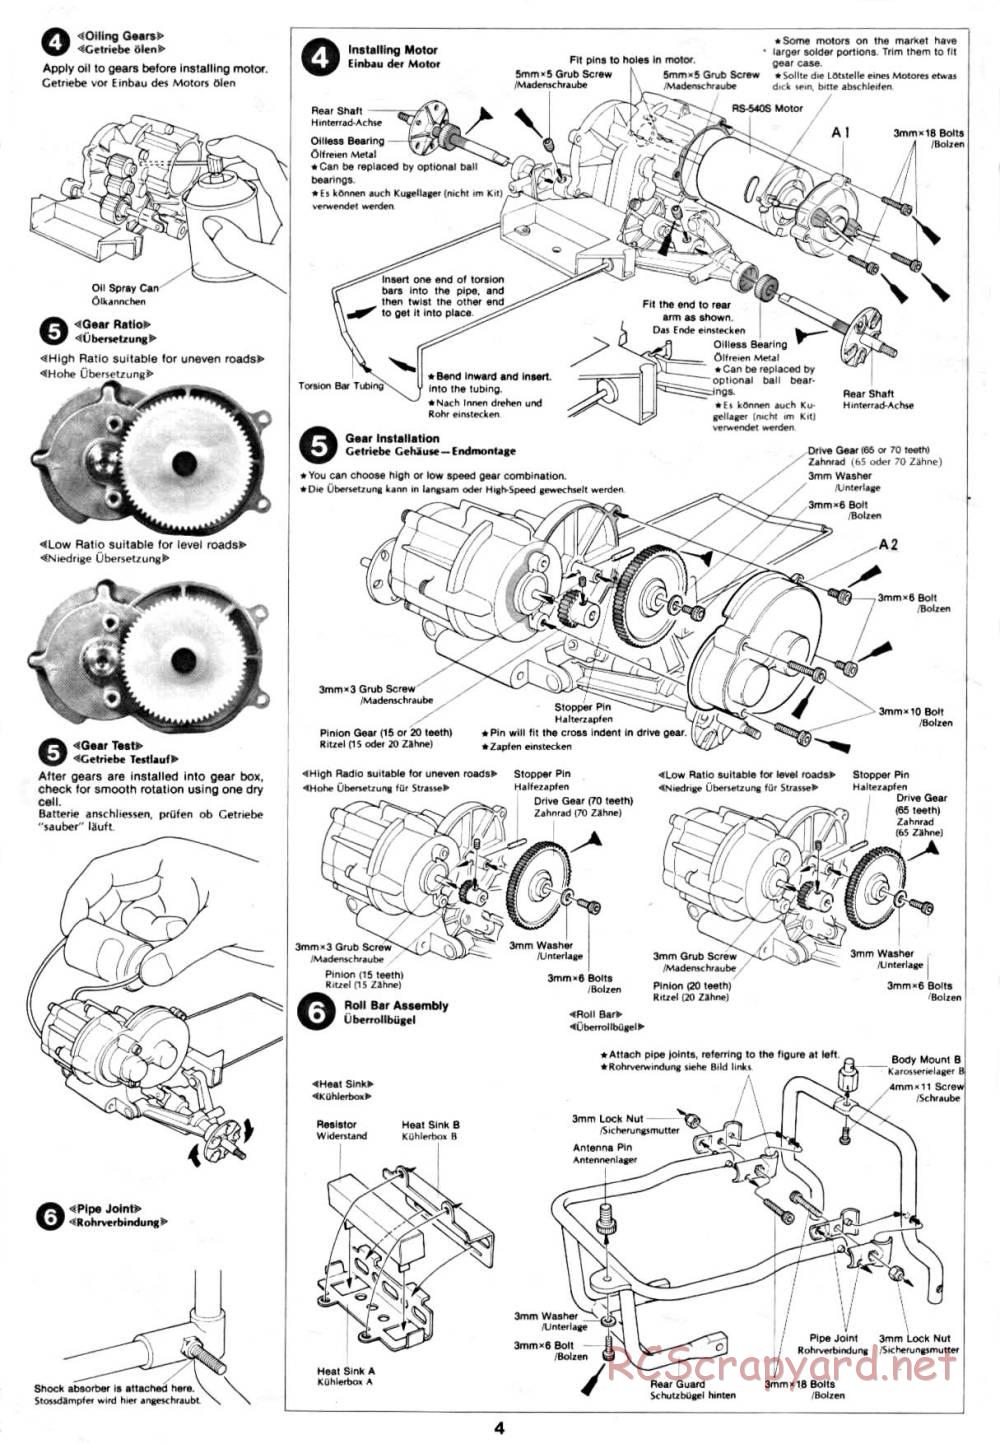 Tamiya - Ford F-150 Ranger XLT - 58027 - Manual - Page 4